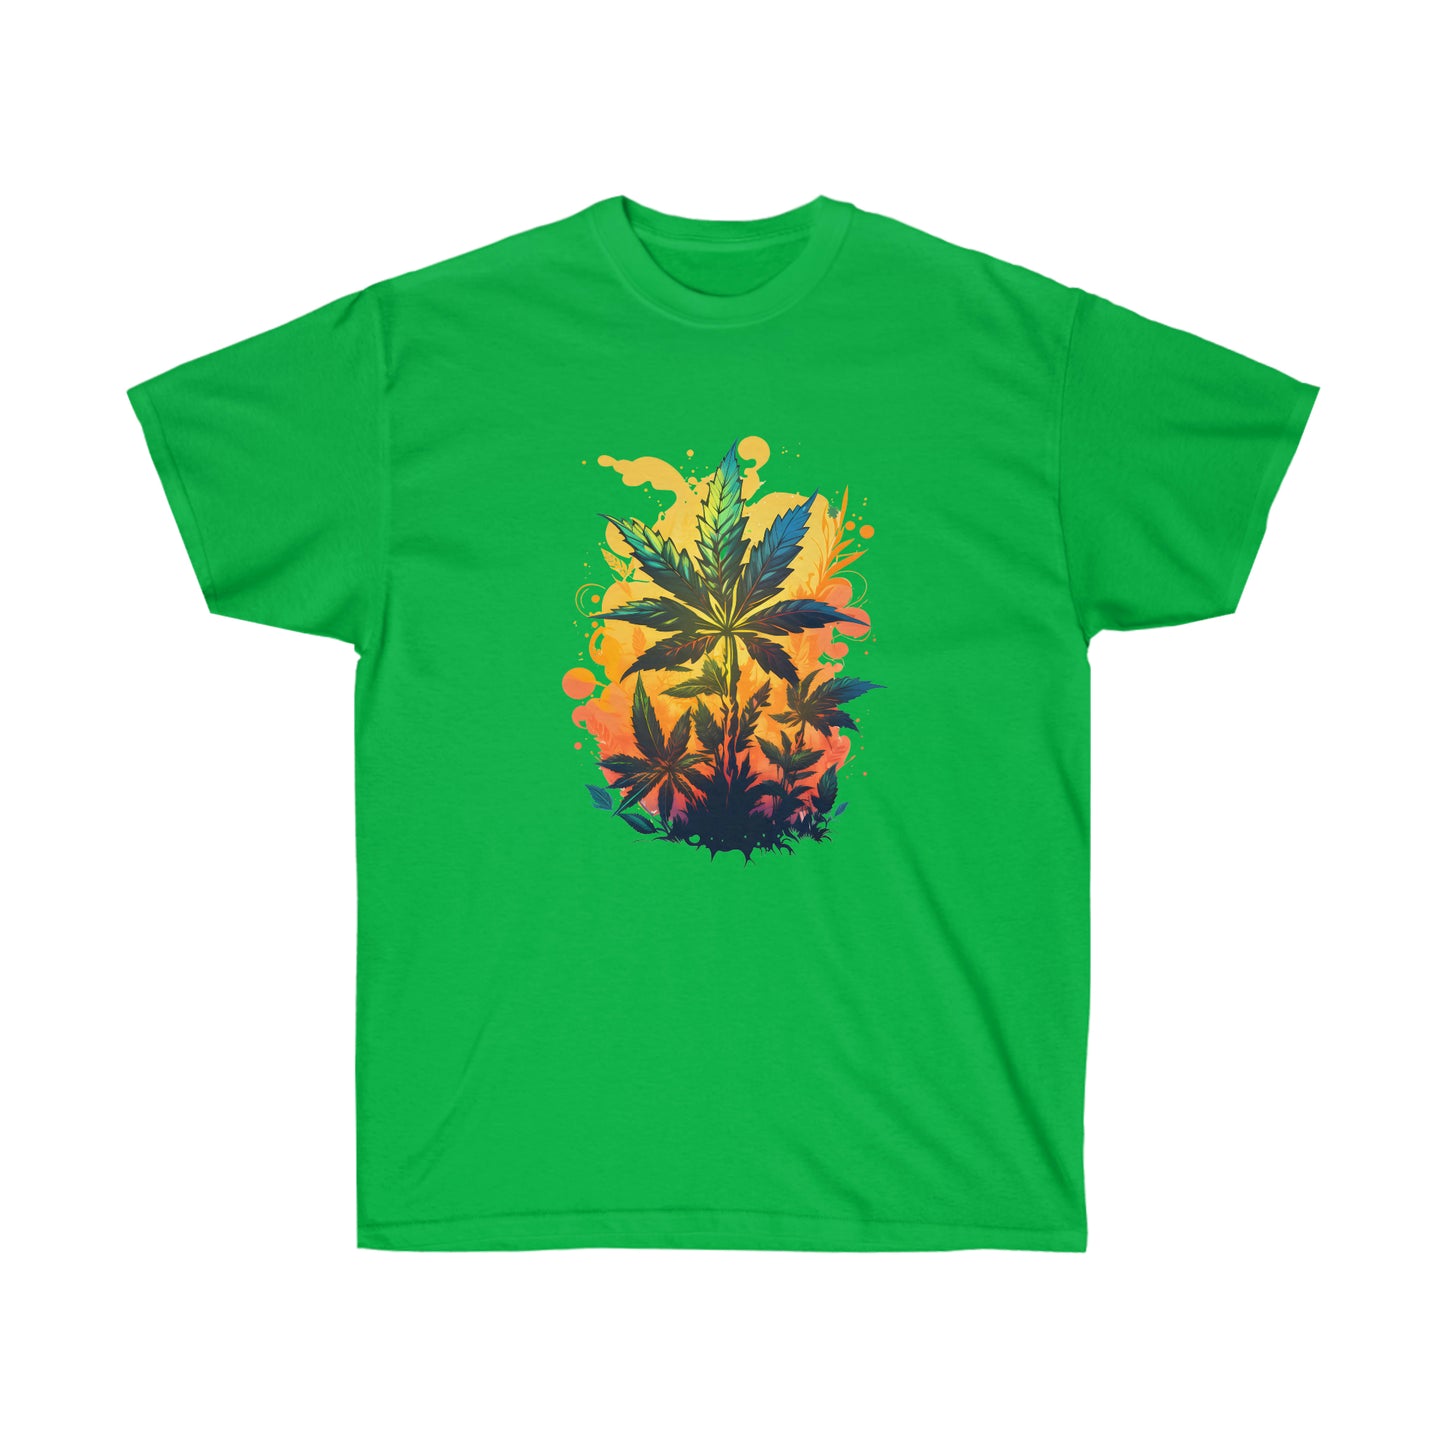 An Irish green, warm paradise cannabis t-shirt